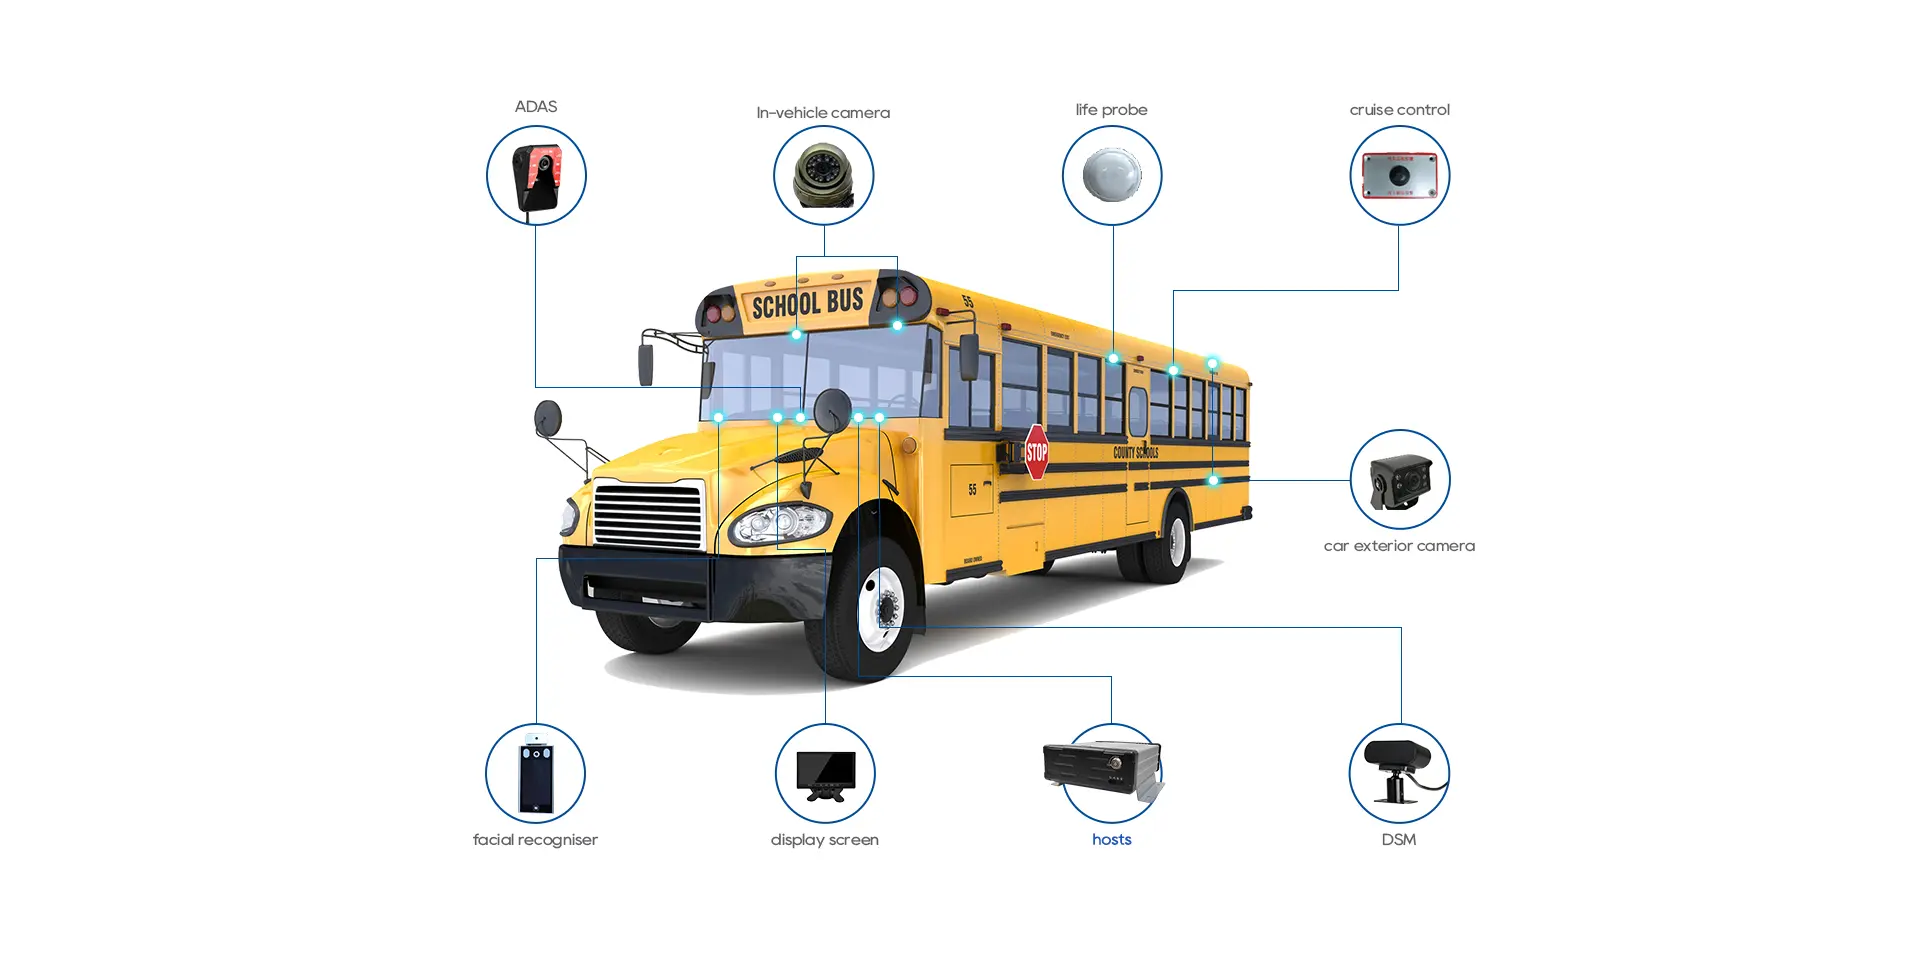 School Bus video Surveillance Systems